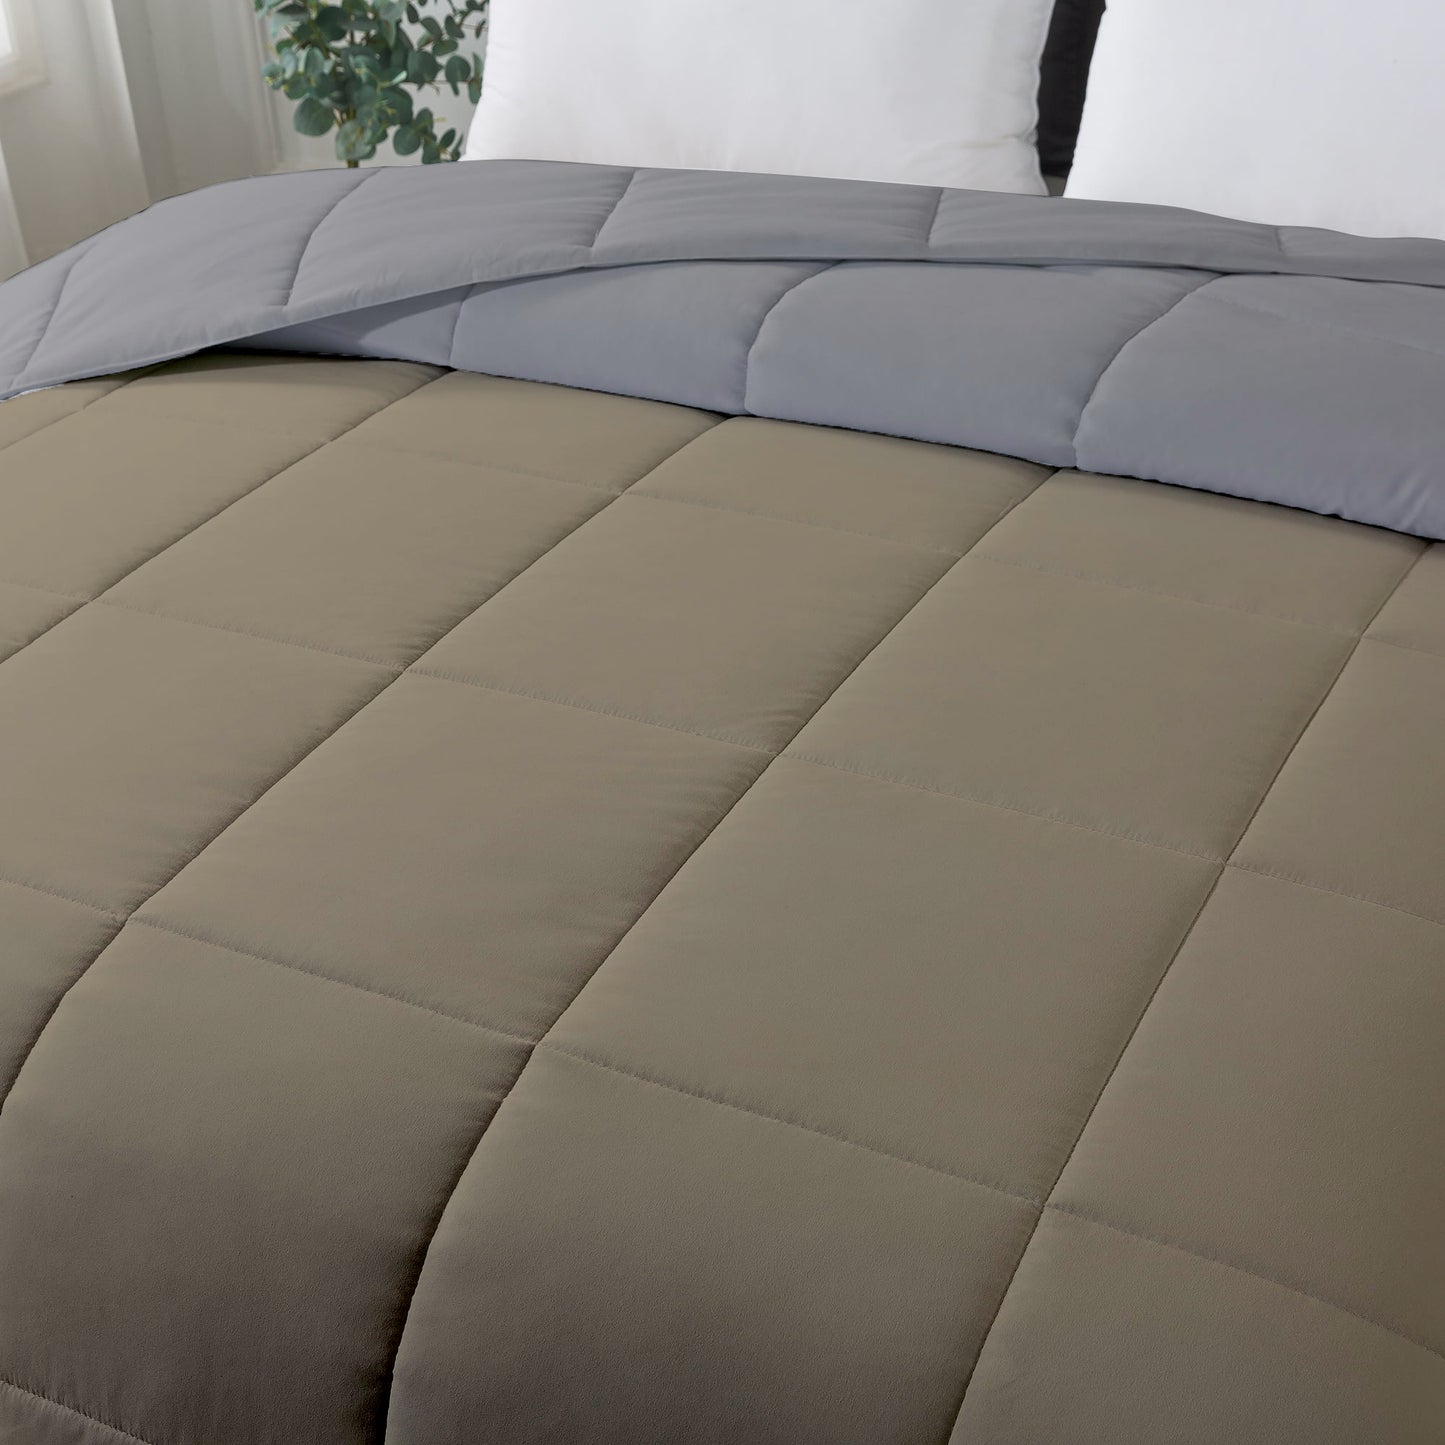 Razzai - 200 GSM Soft AC Comforter Hotel Quality-Down Alternative Reversible Comforter - All Season |AC Comforter/Blanket/Quilt/Rajai Double Bed|Silver/Beige